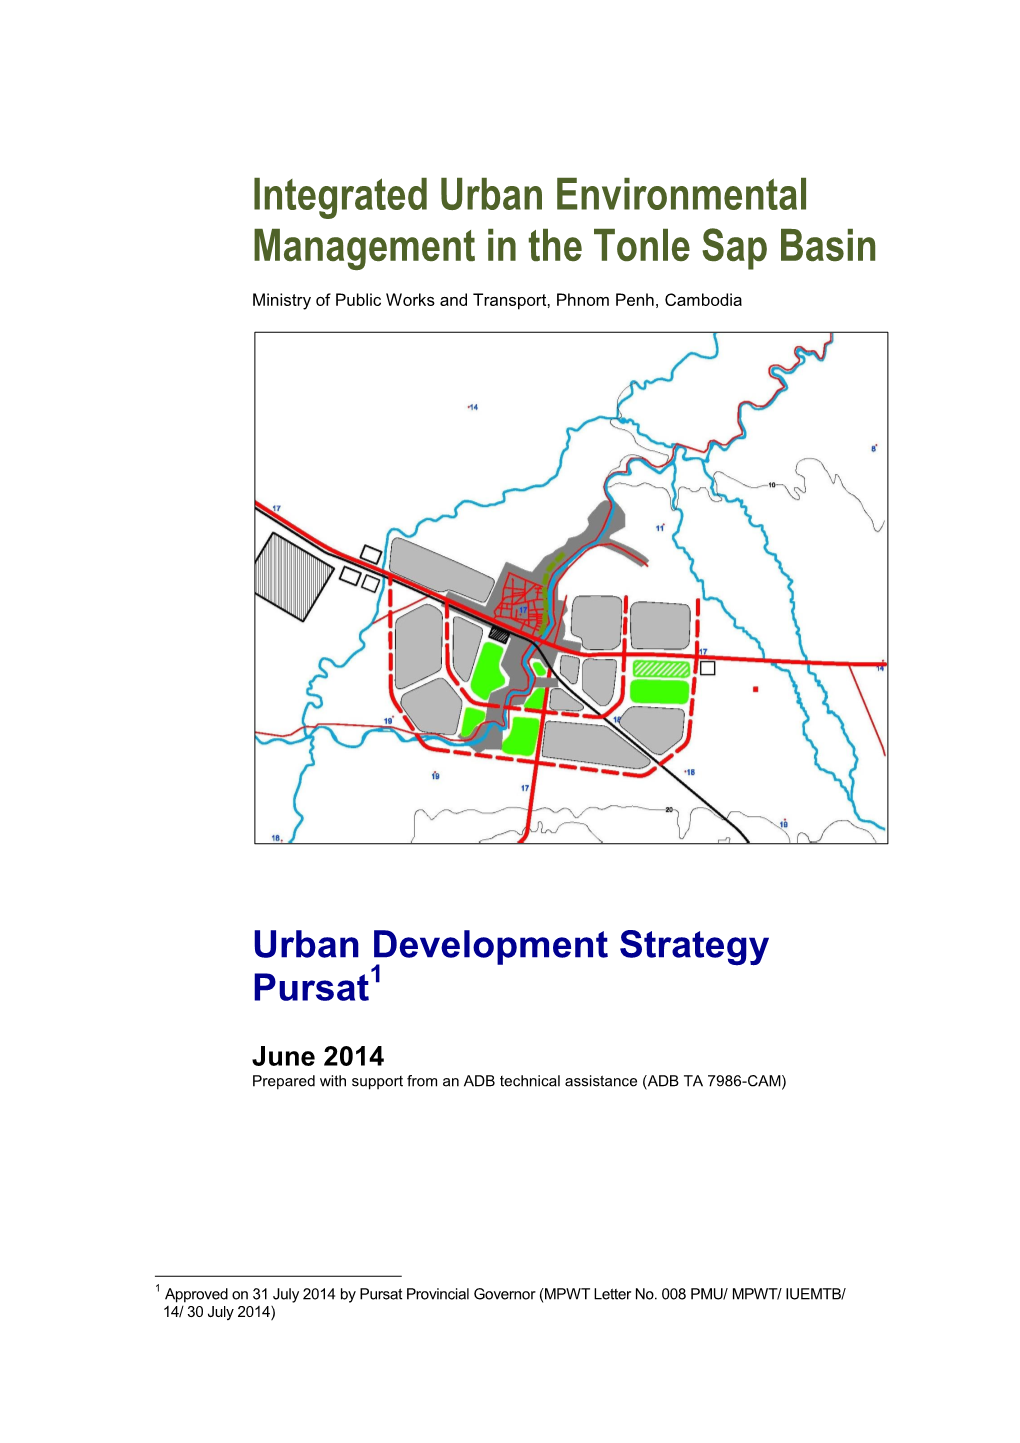 Pursat Urban Development Strategy